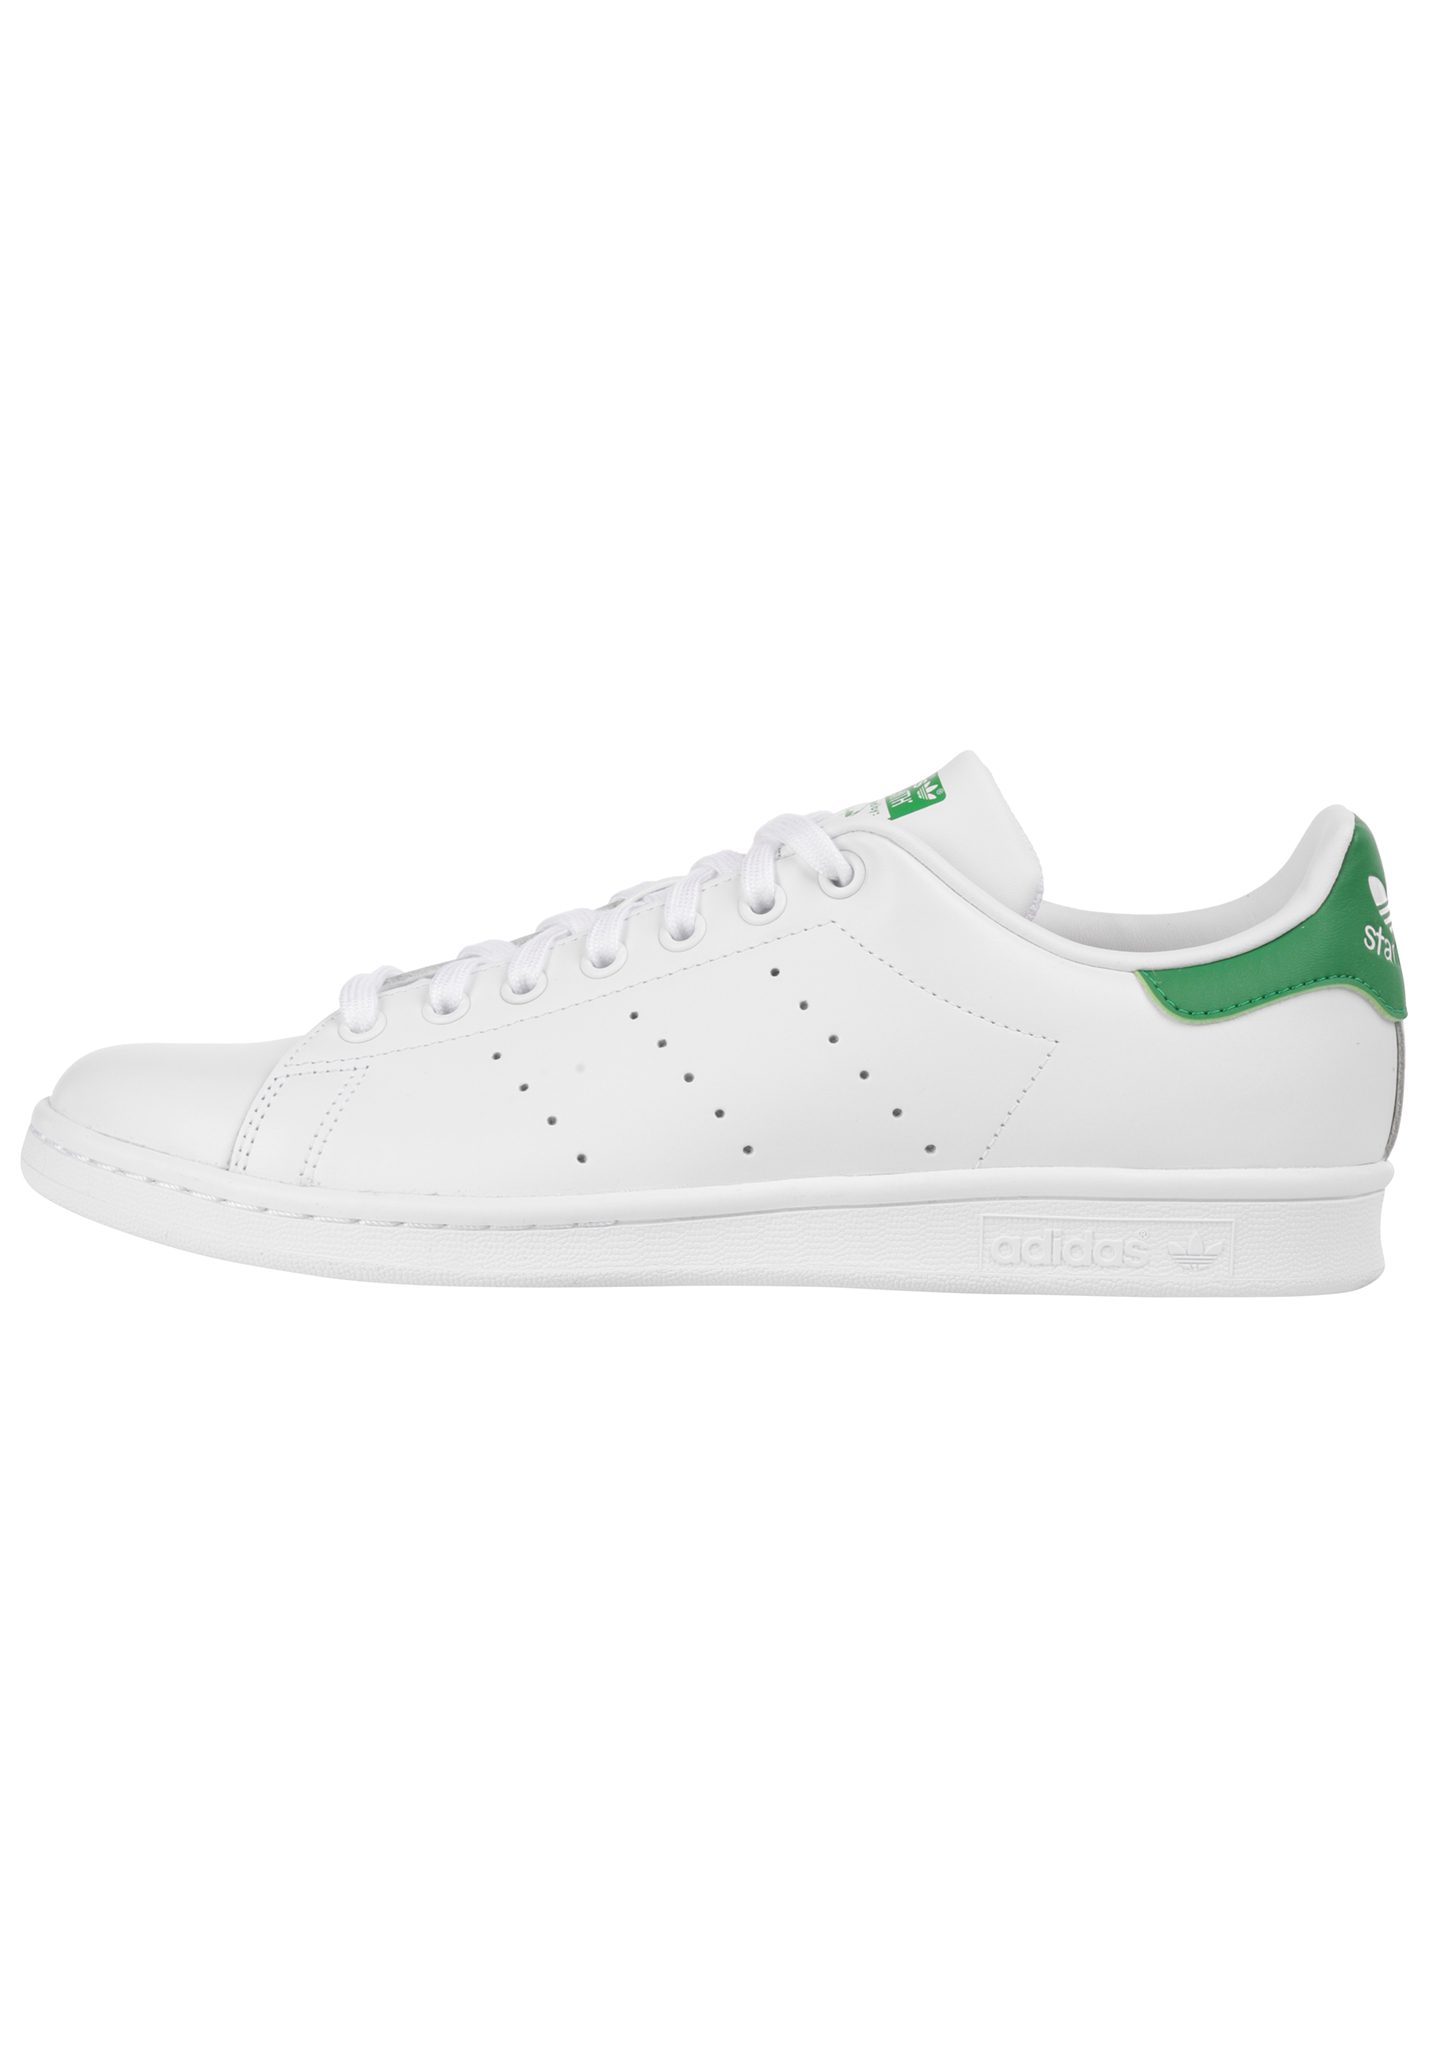 Adidas Originals Stan Smith Sneaker Low white - green 38,5